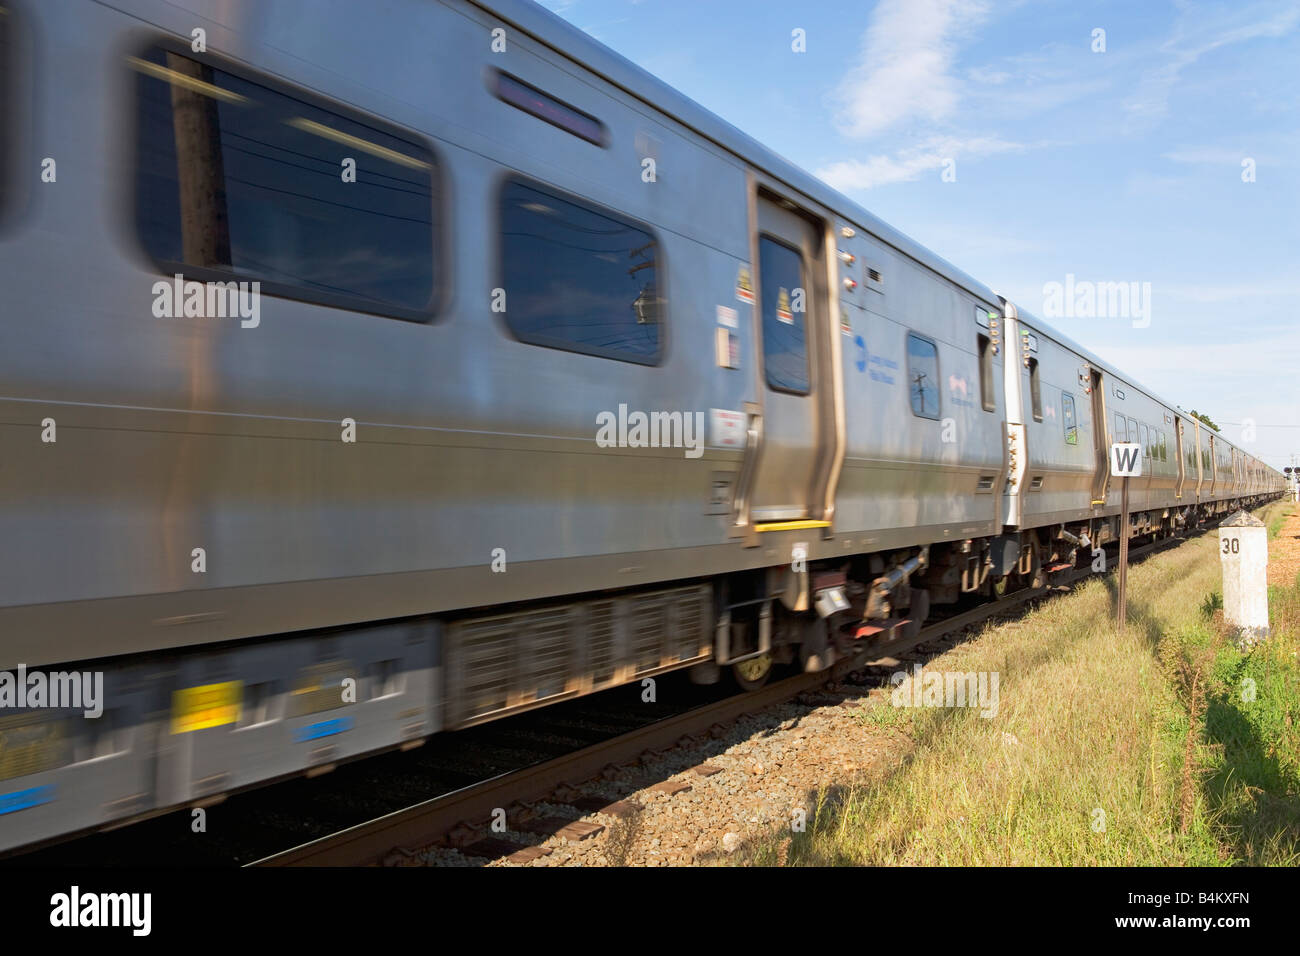 Train, aerodynamic, exterior, nyc, new york, journey, transit, mass transit, railroad, railway, outside, sightsee, sightseeing, Stock Photo